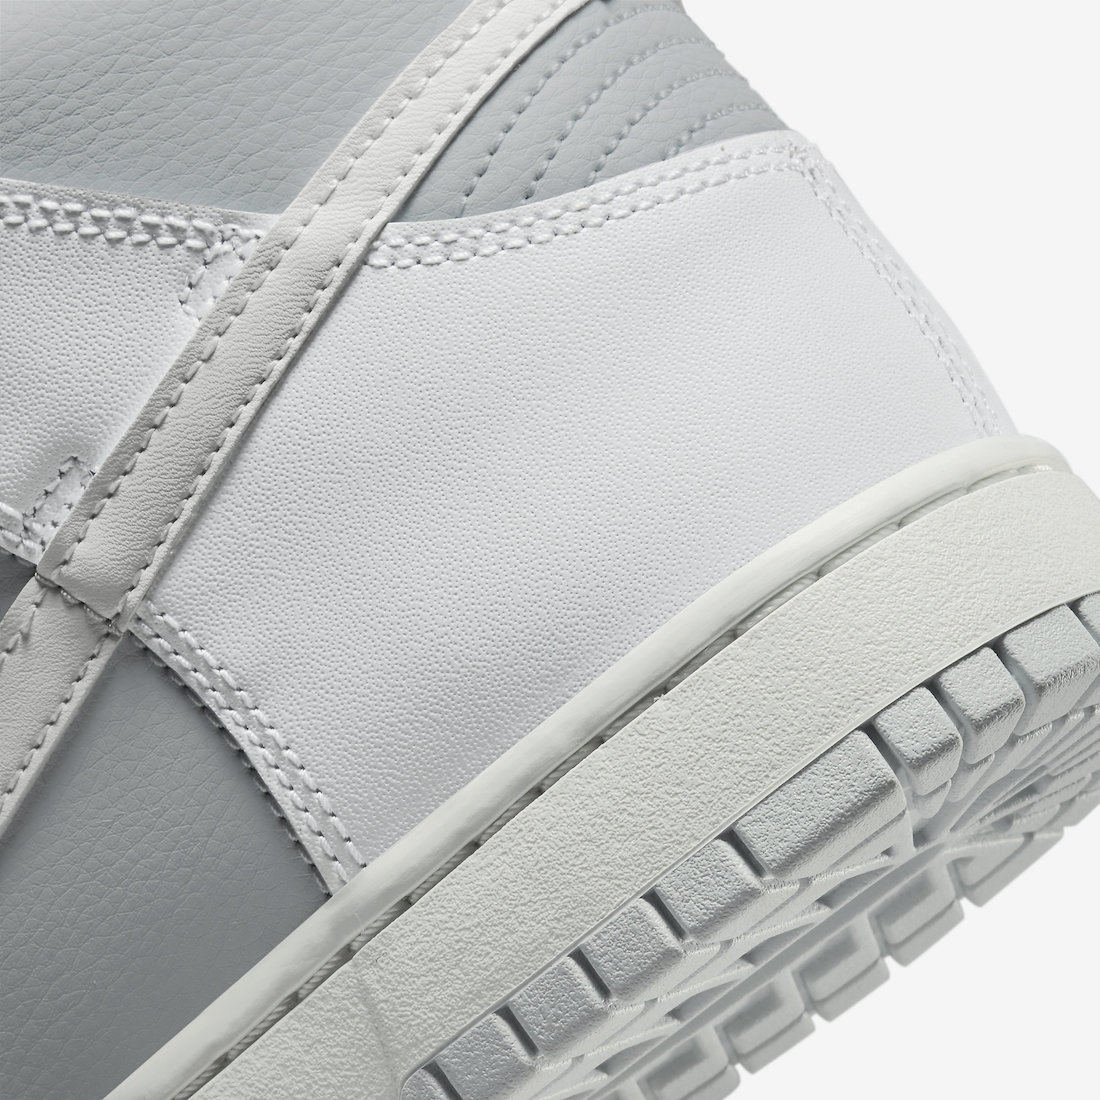 Nike Dunk High Grey White DJ6189-100 Release Date